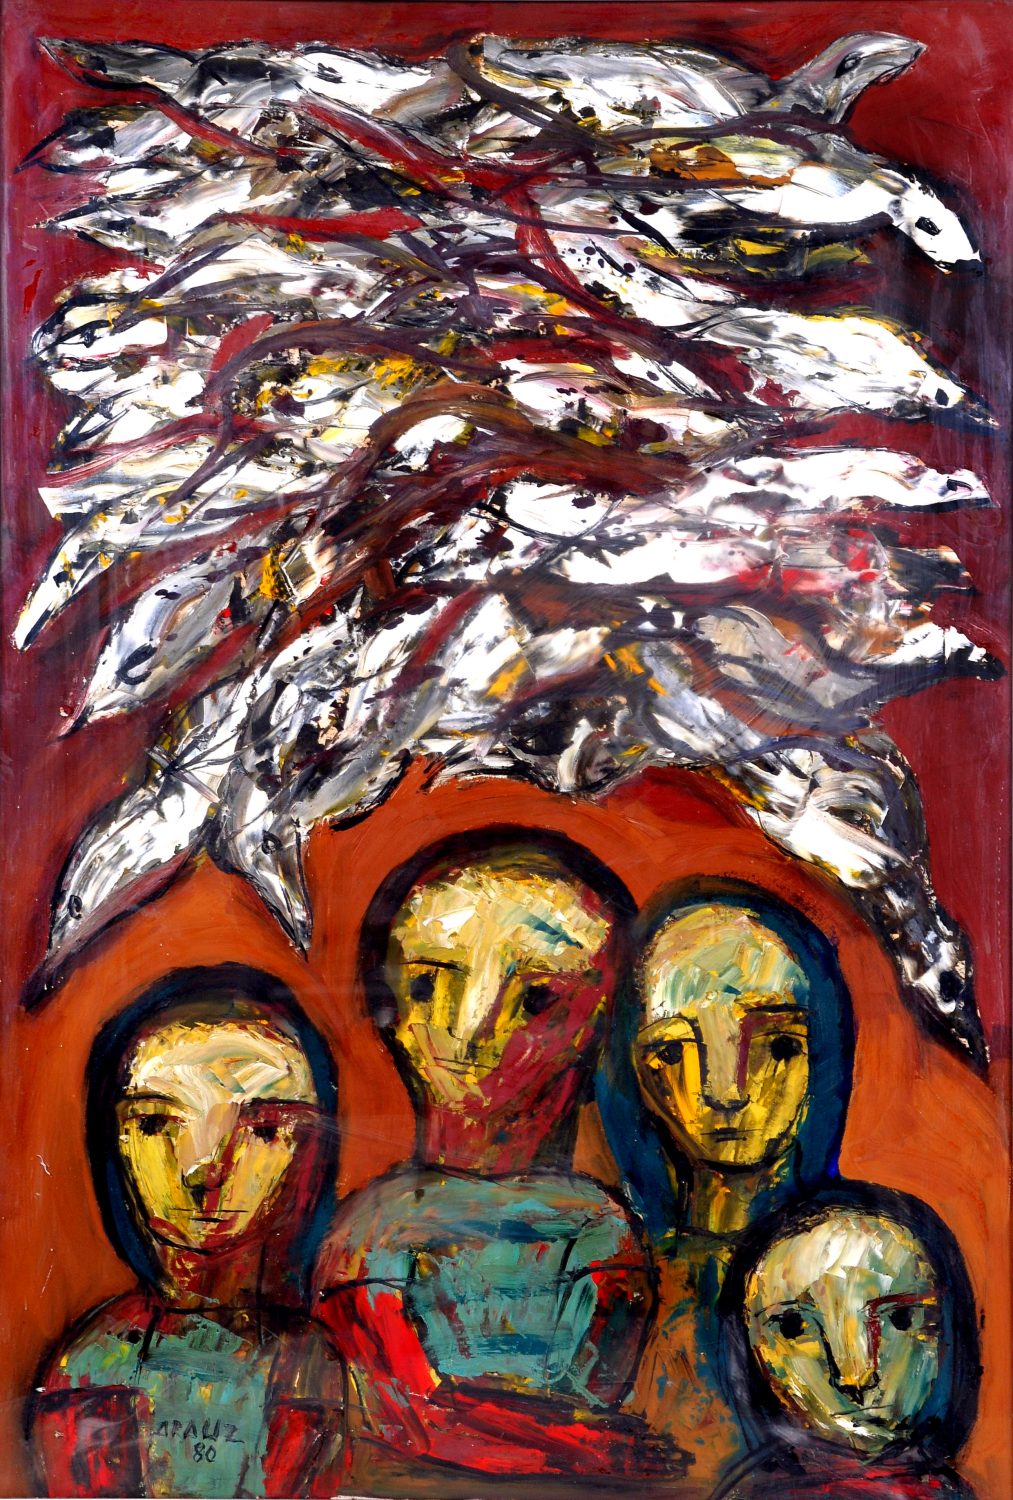 thumbnail of Untitled work by Ecuadorian artist FÃ©lix Arauz. medium: oil on canvas. Dimensions: 41 x 28 inches. date: 1980